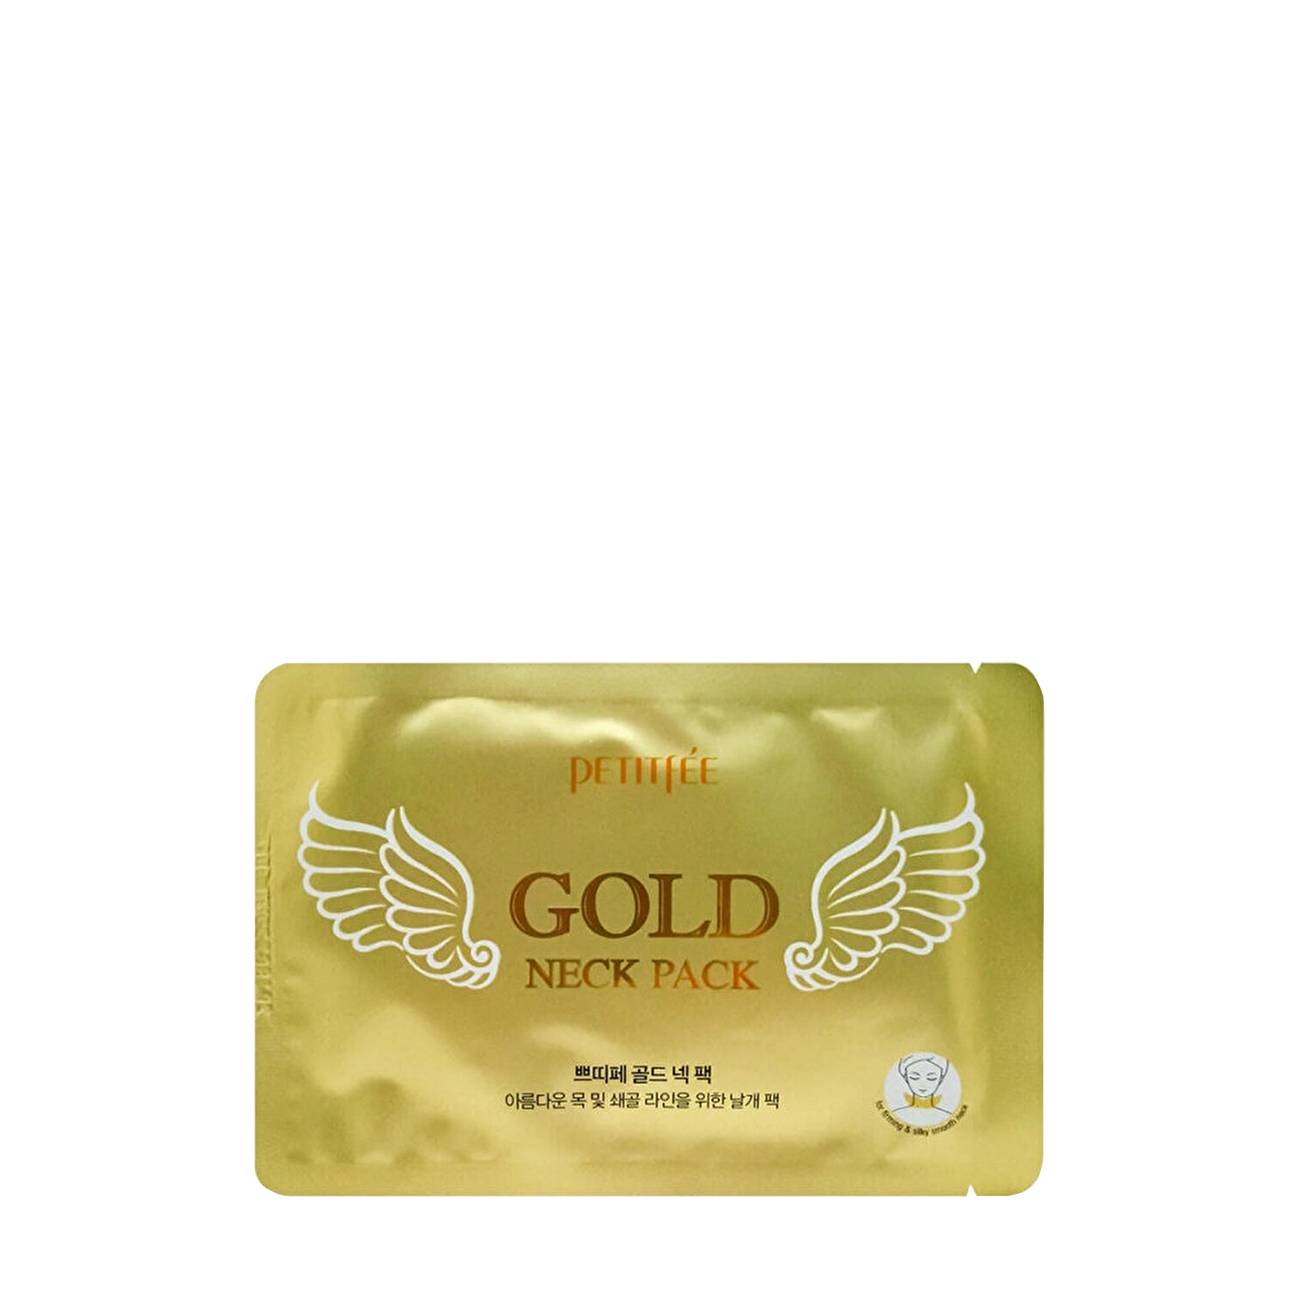 Gold Neck Patch 10 gr Petitfee bestvalue.eu